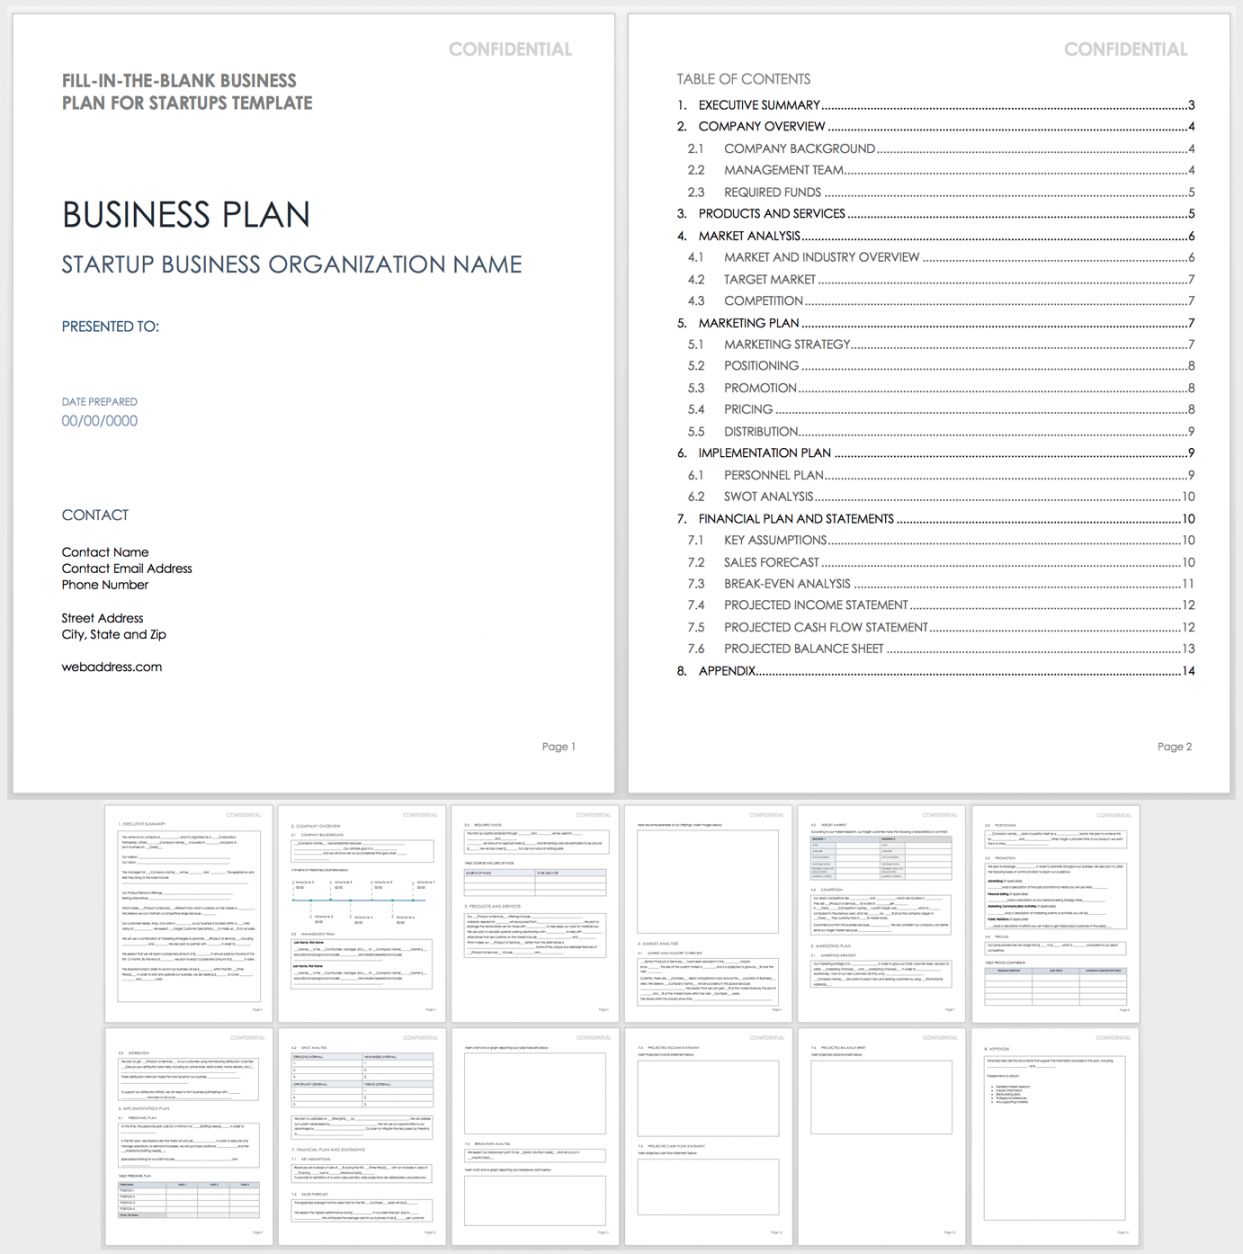 Fill-In-the-Blank Business Plans  Smartsheet